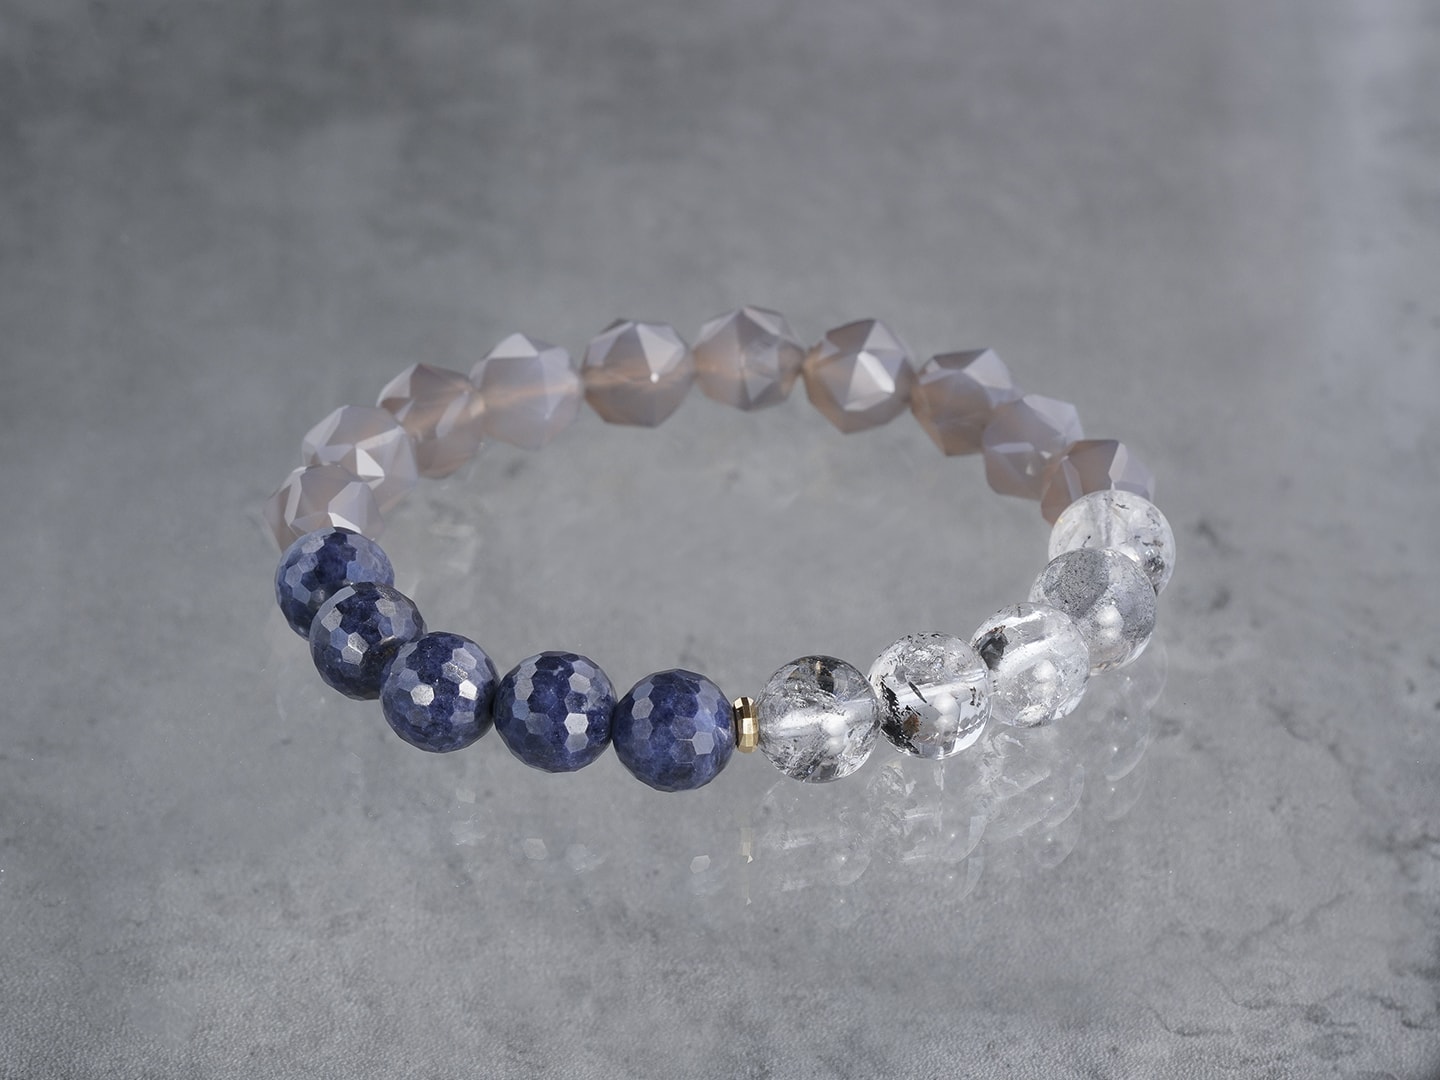 Blue sapphire × Graphite in quartz × Gray chalcedony bracelet 